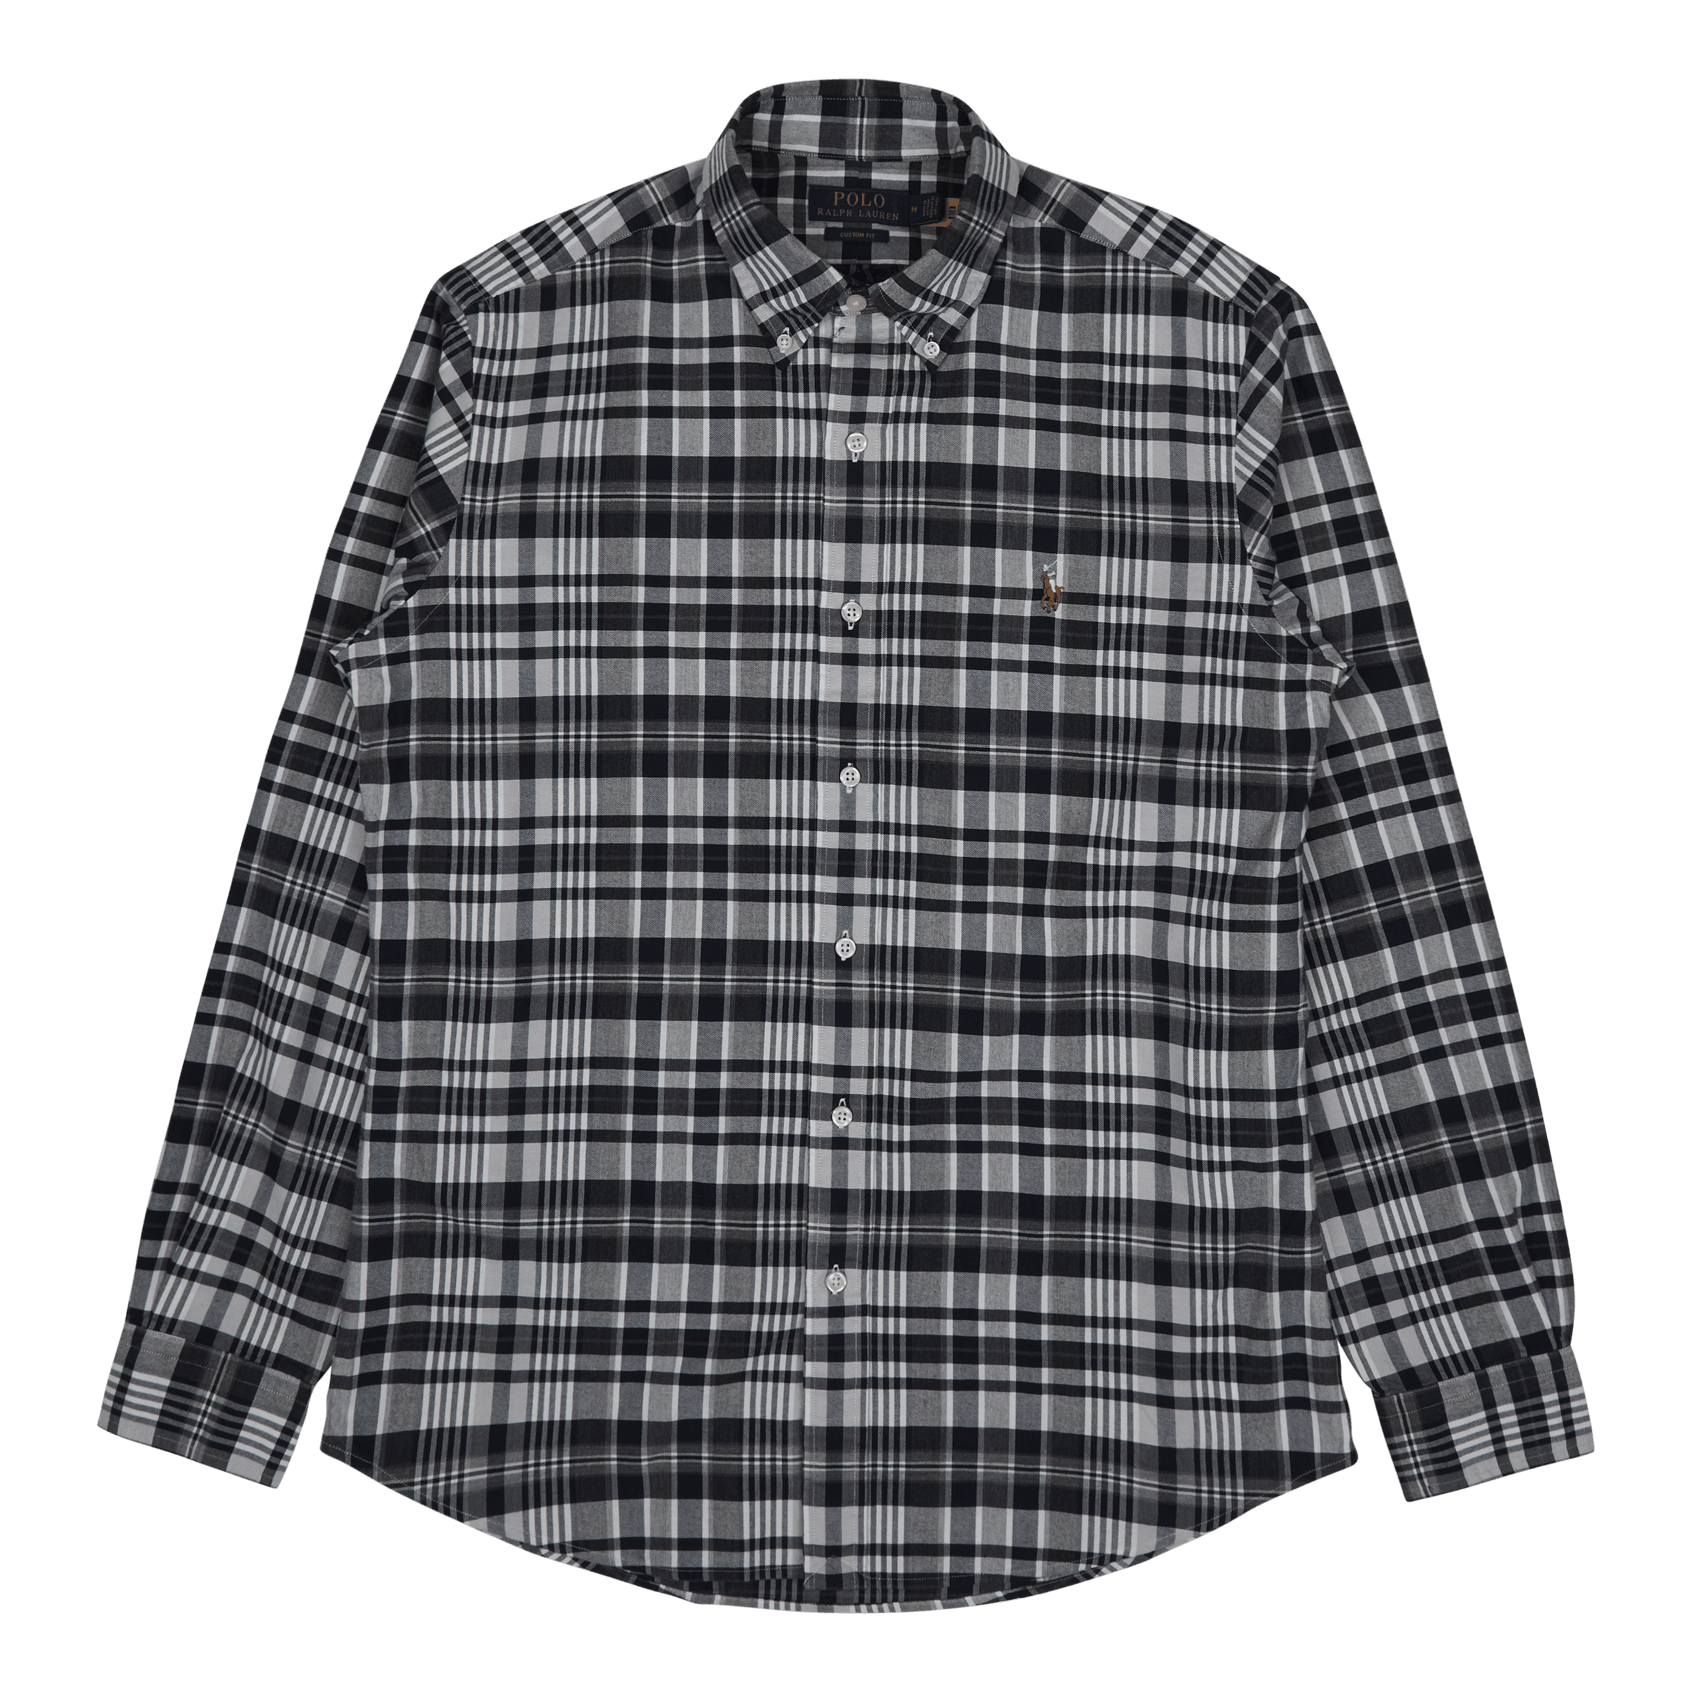 Custom Fit Plaid Oxford Shirt Grey Heather / Navy Multi